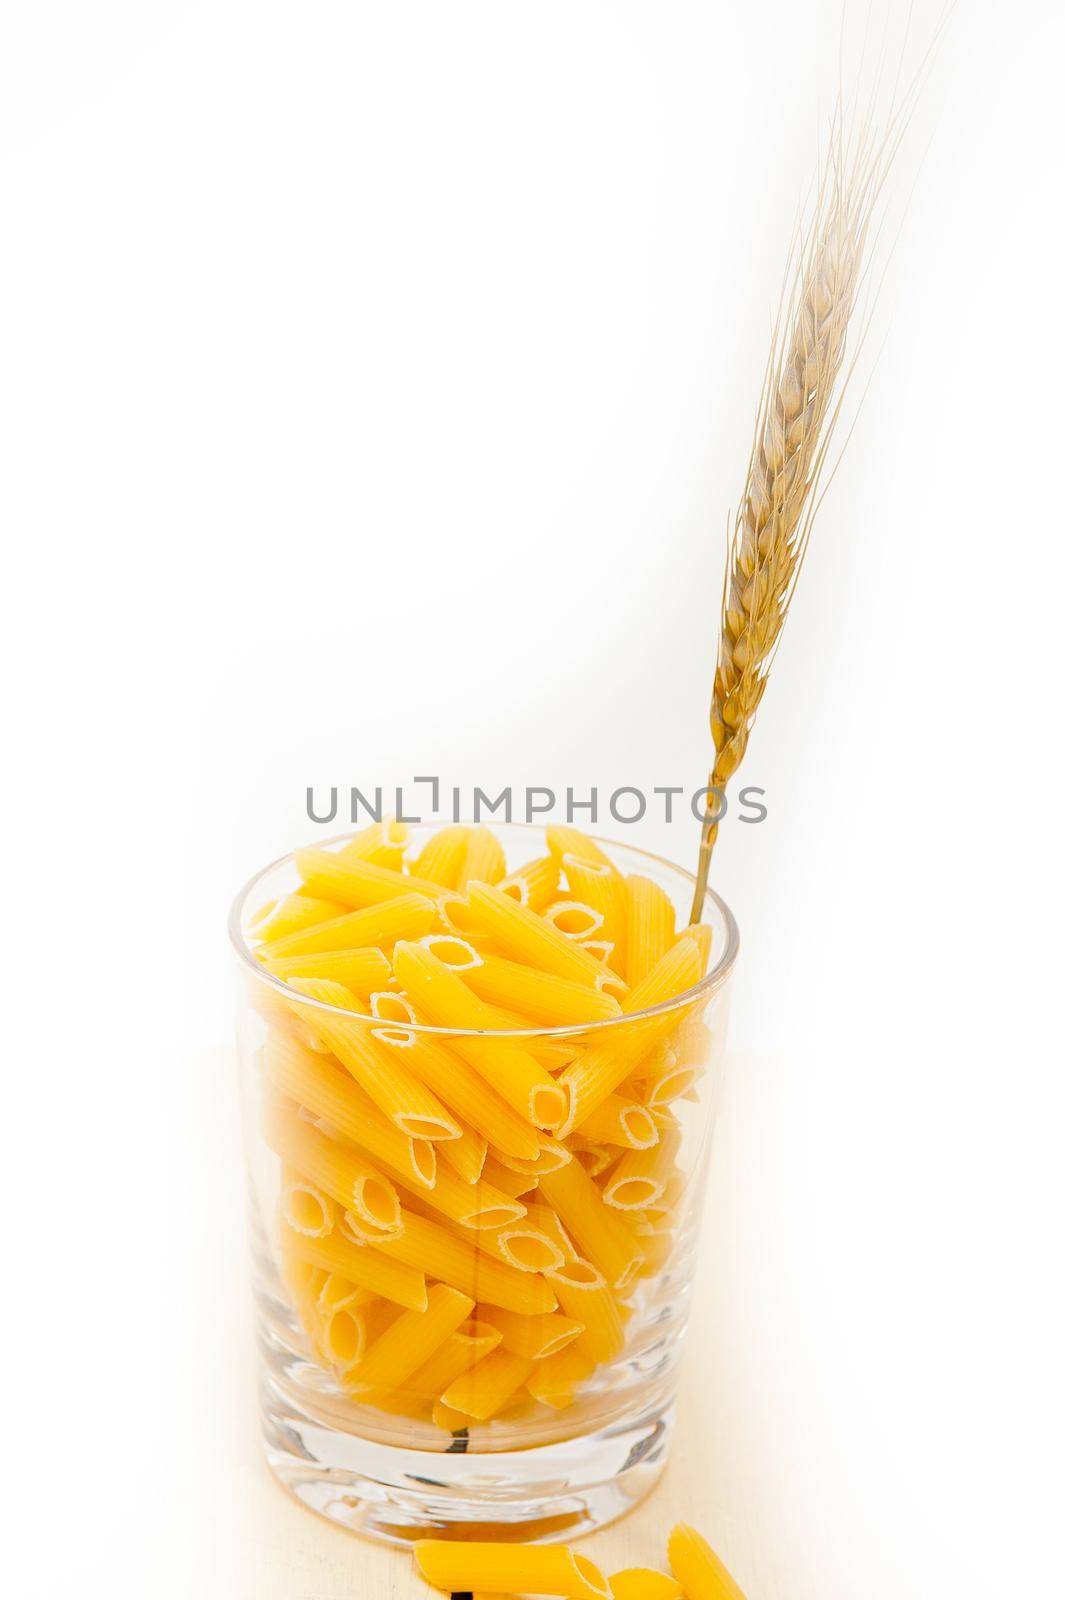 Italian pasta penne with wheat by keko64